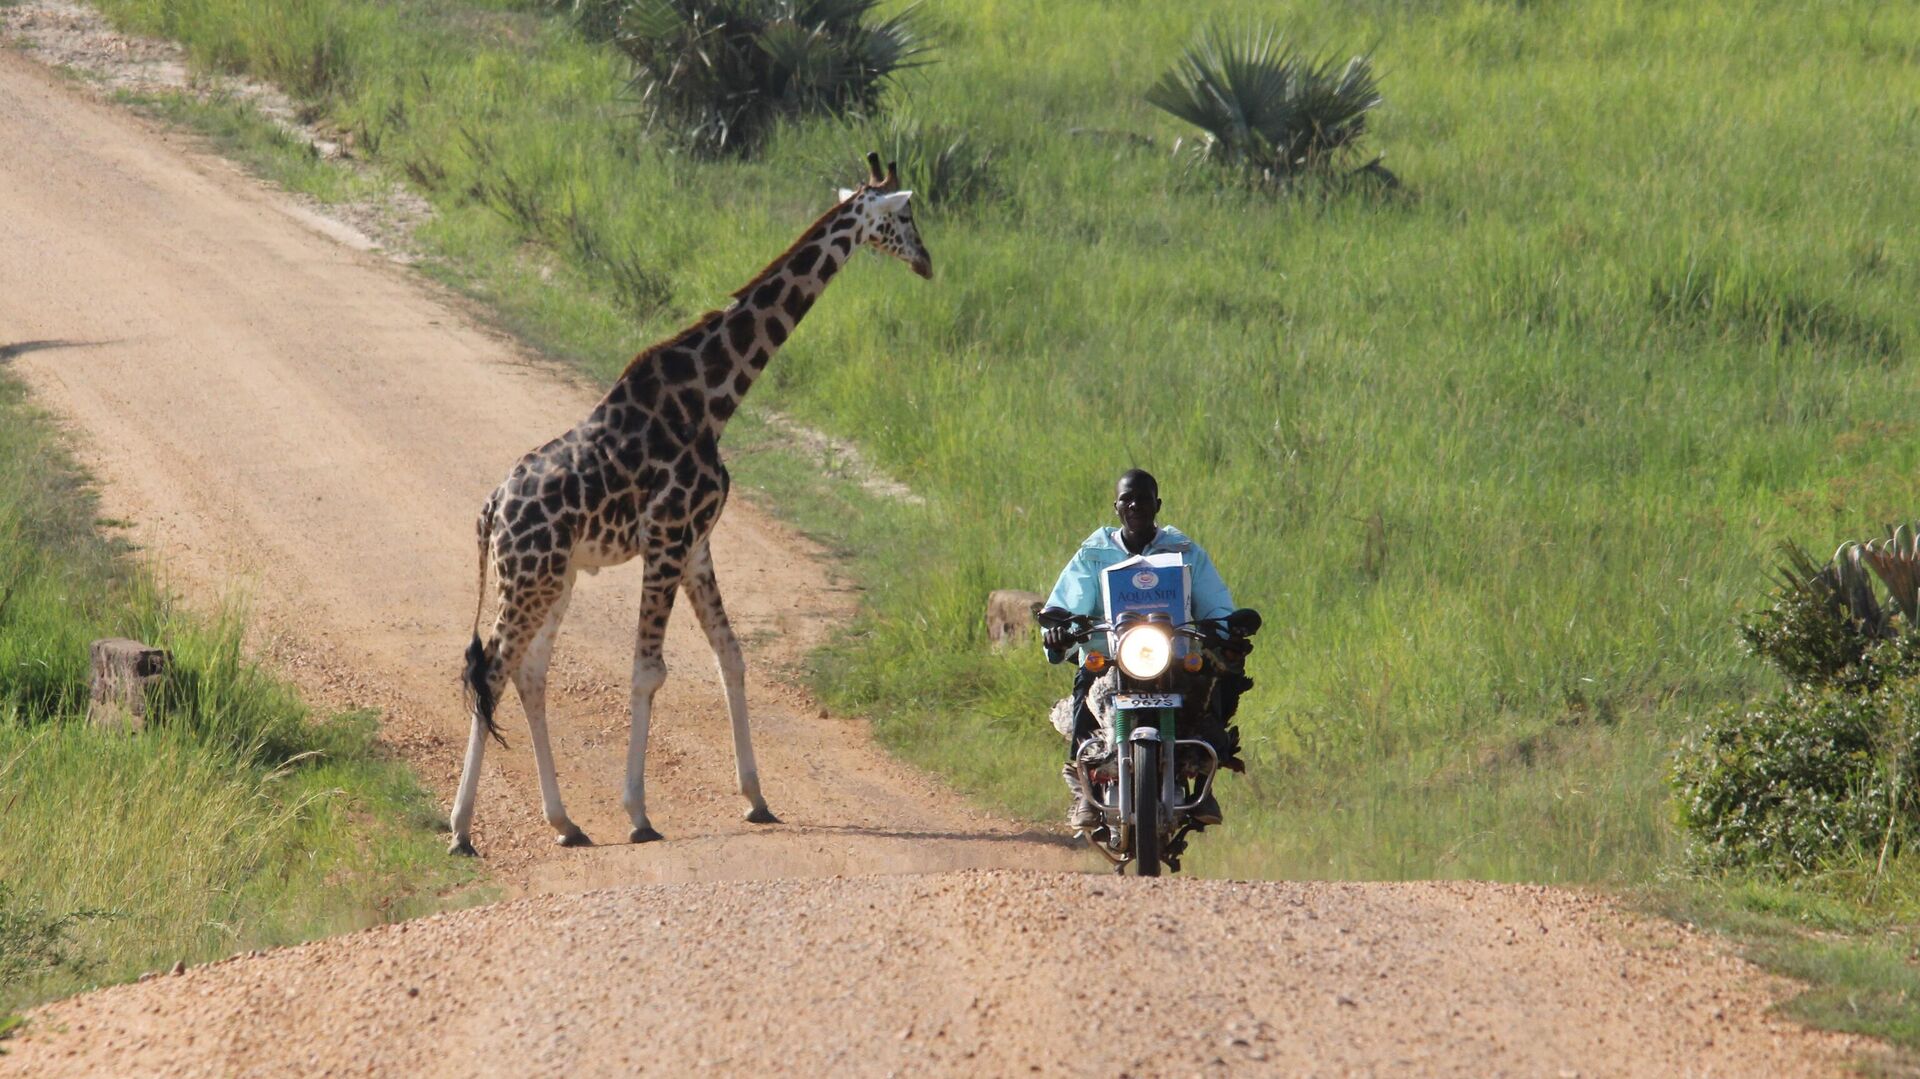 Мотоциклист проезжает мимо жирафа в Уганде - РИА Новости, 1920, 14.10.2020